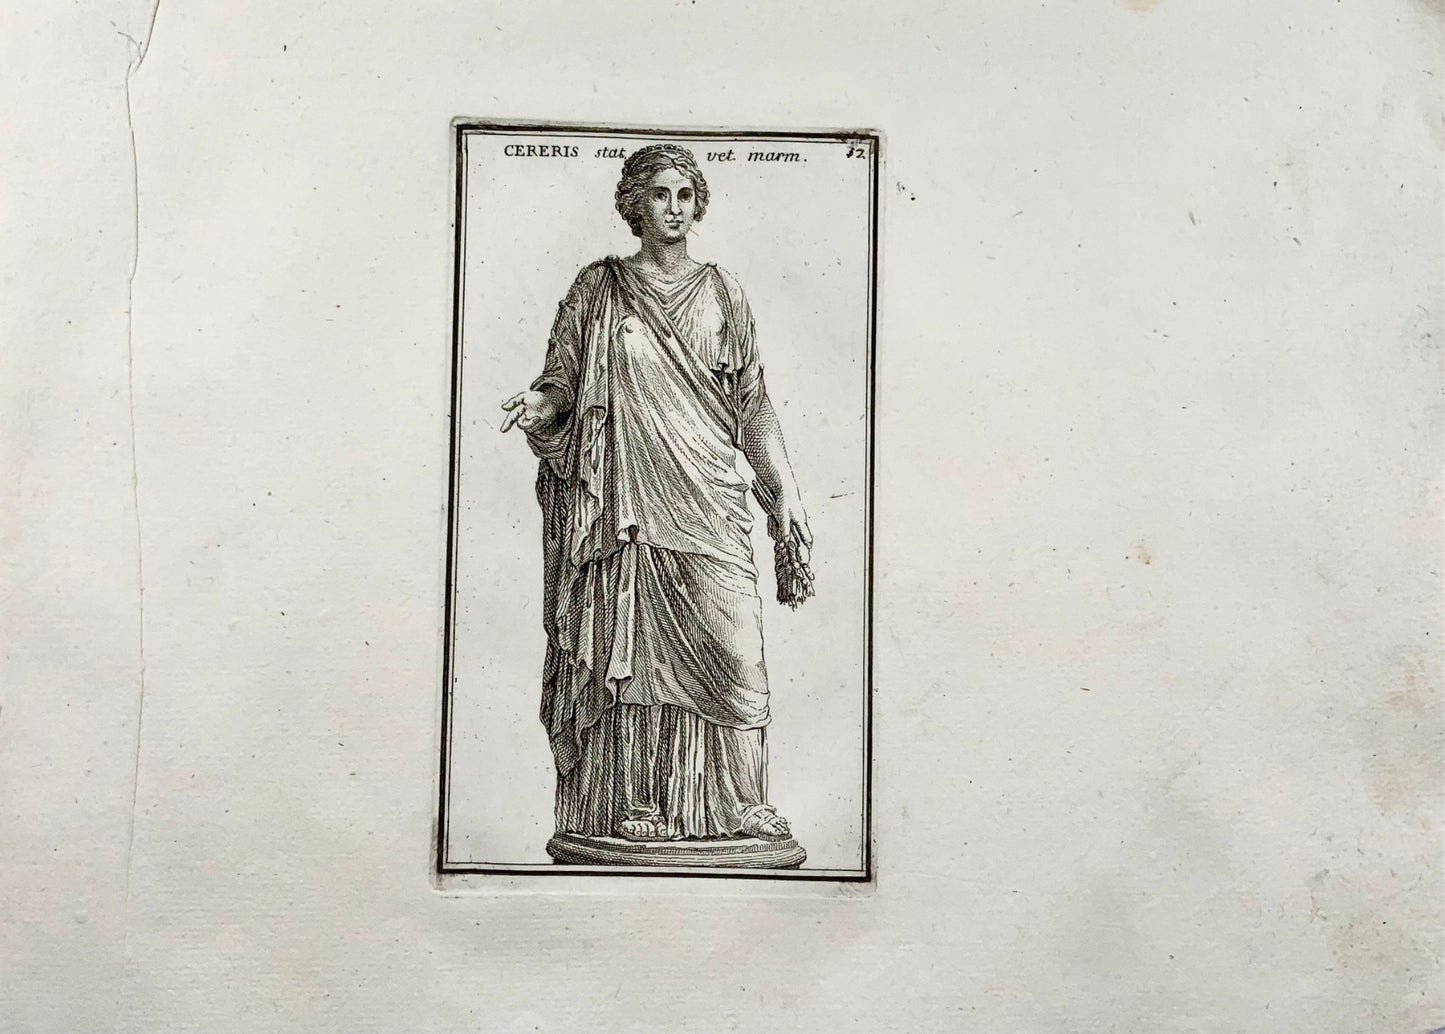 1779 Statue de Cérès, Dieu de l'Agriculture, gravure, "Calcografia di Roma"